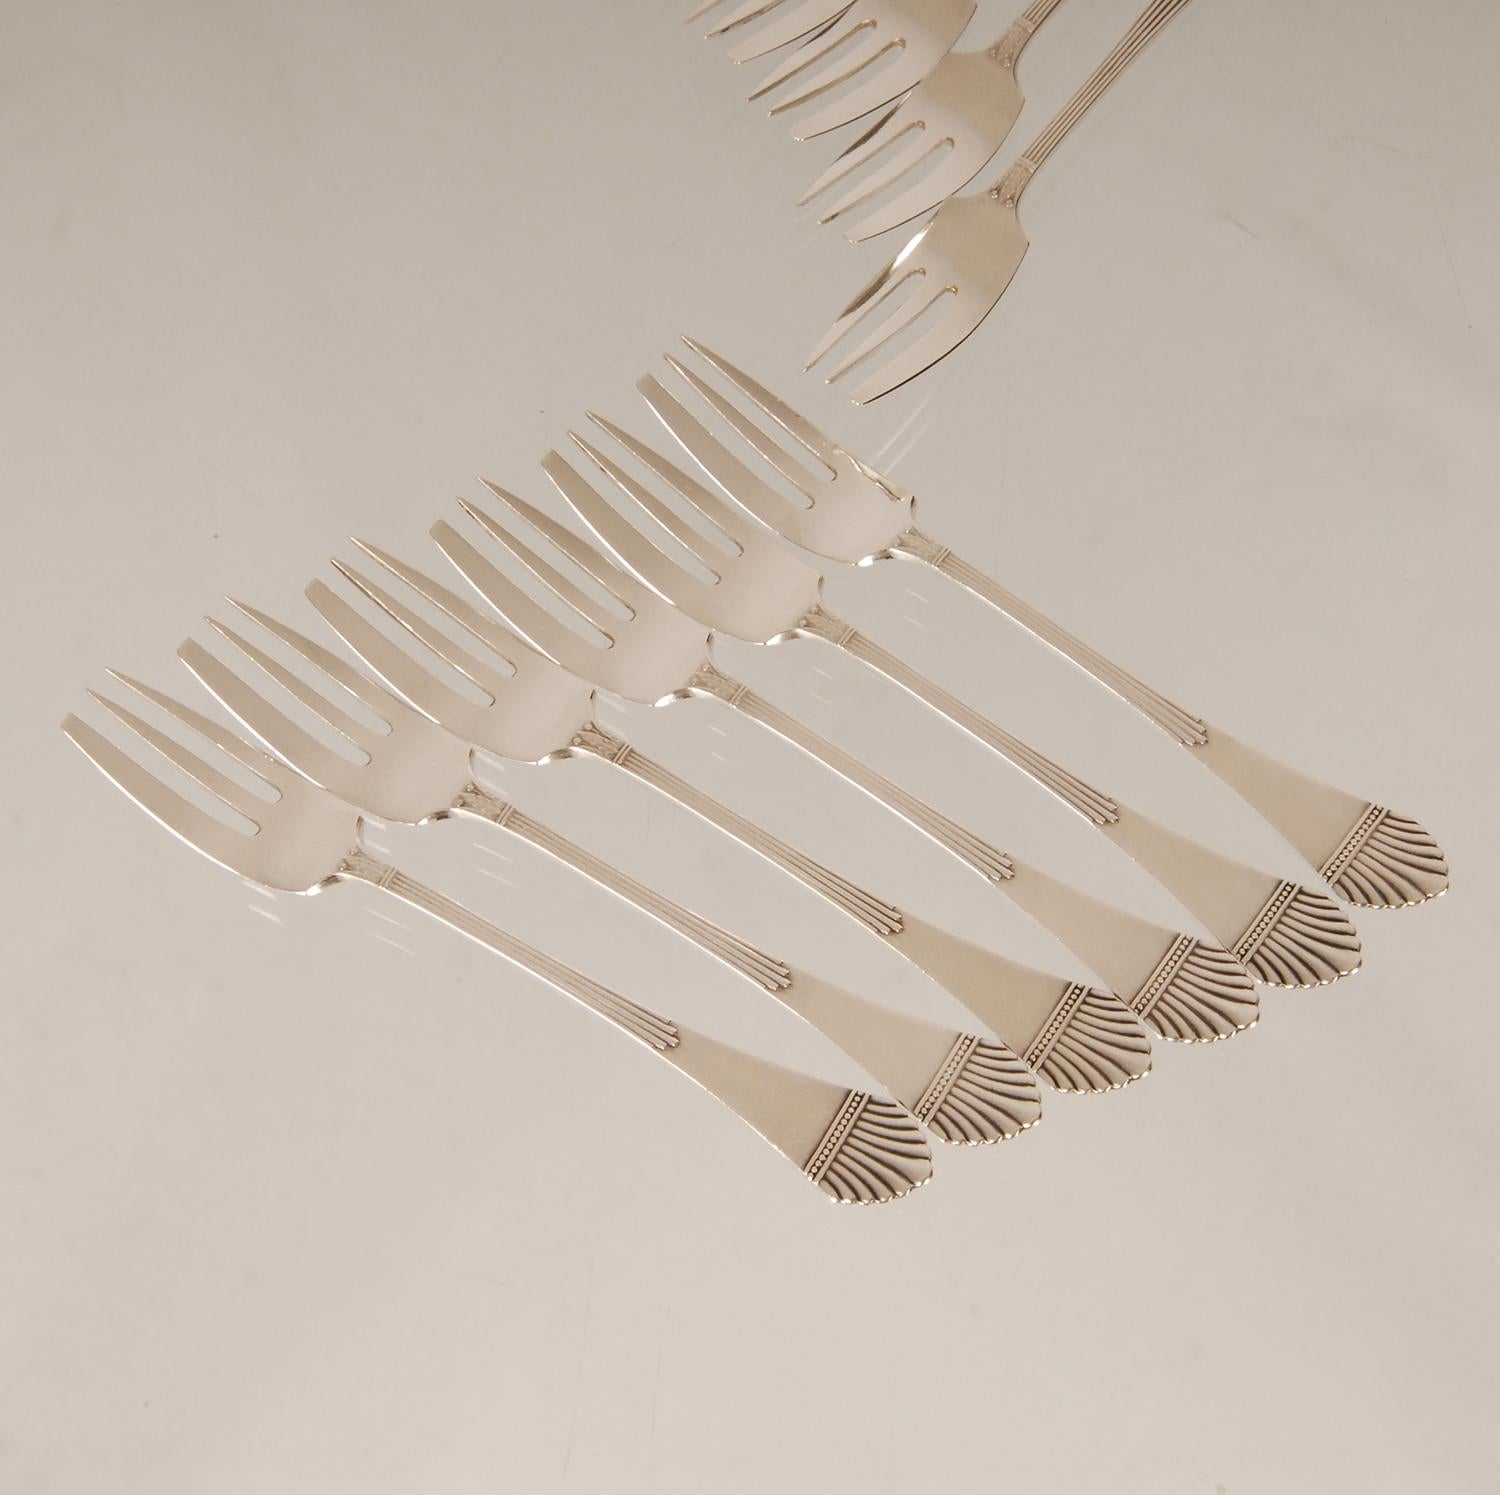 Art Deco Sterling Silver Flatware 1920s Spoons, Forks, Cake Server Set 31 Pieces 2